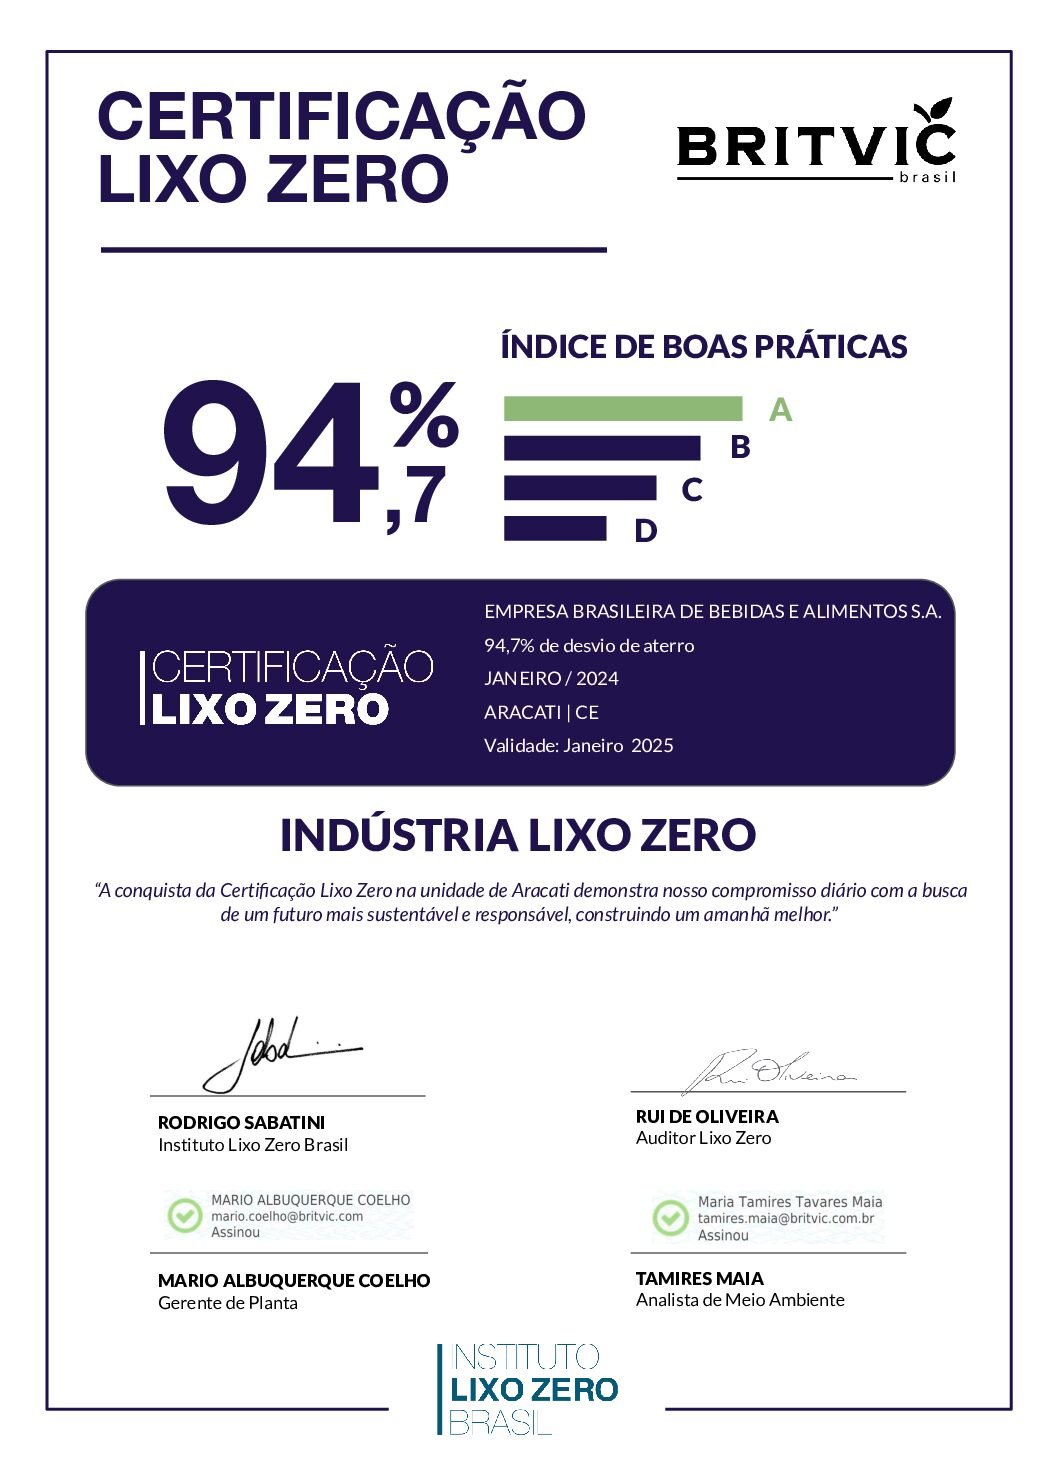 CertificaçãoLixoZero_Britvic_Aracati_CE_Janeiro_2024